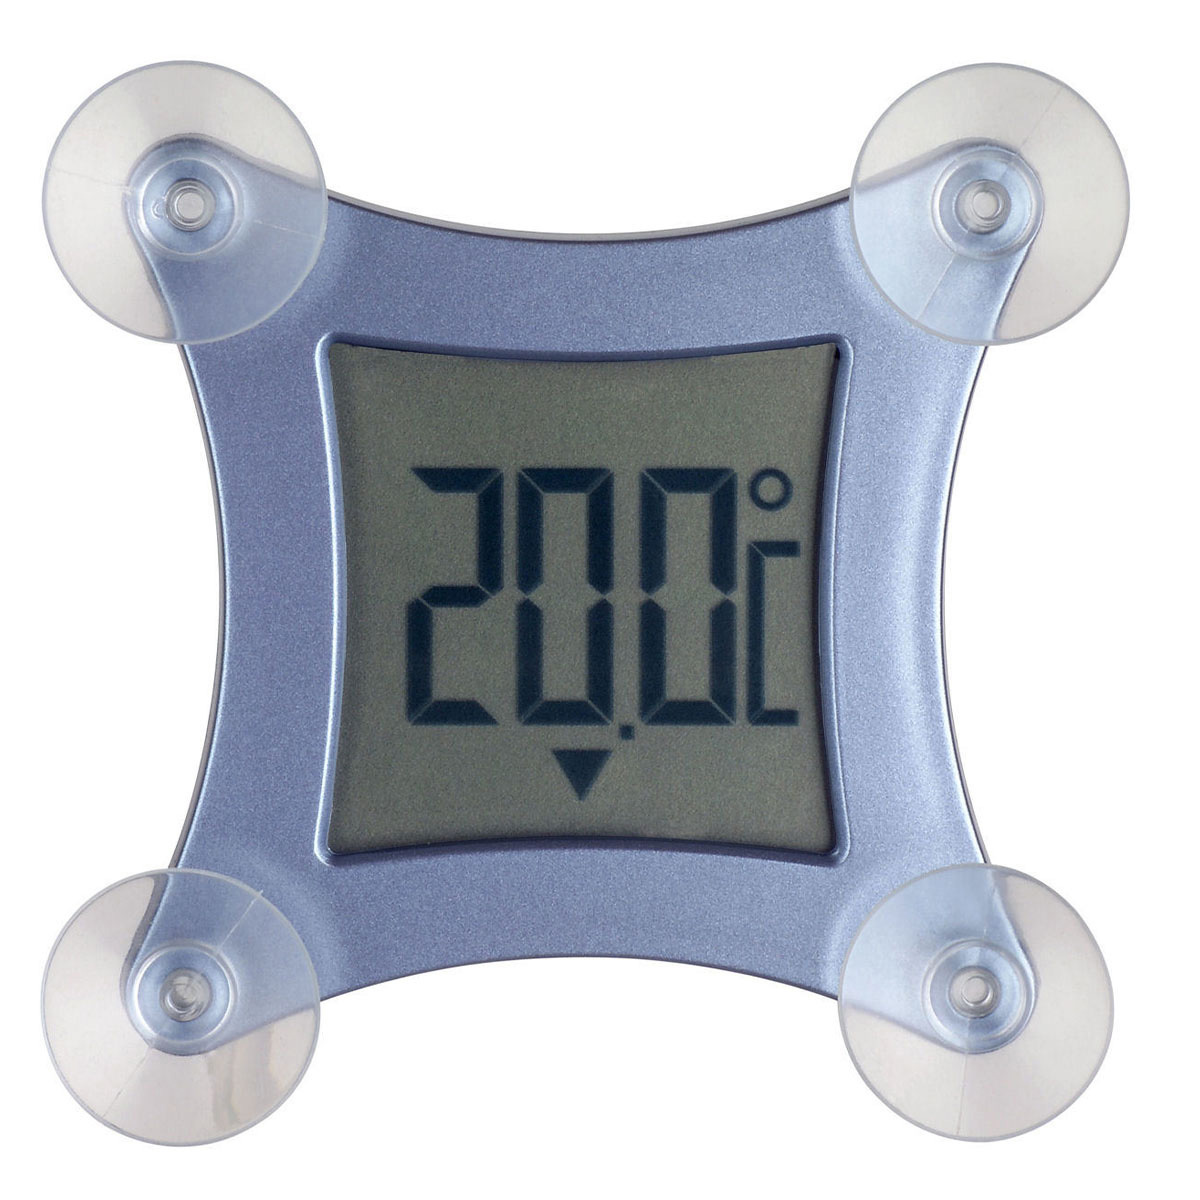 30-1026-digitales-fensterthermometer-pocco-1200x1200px.jpg